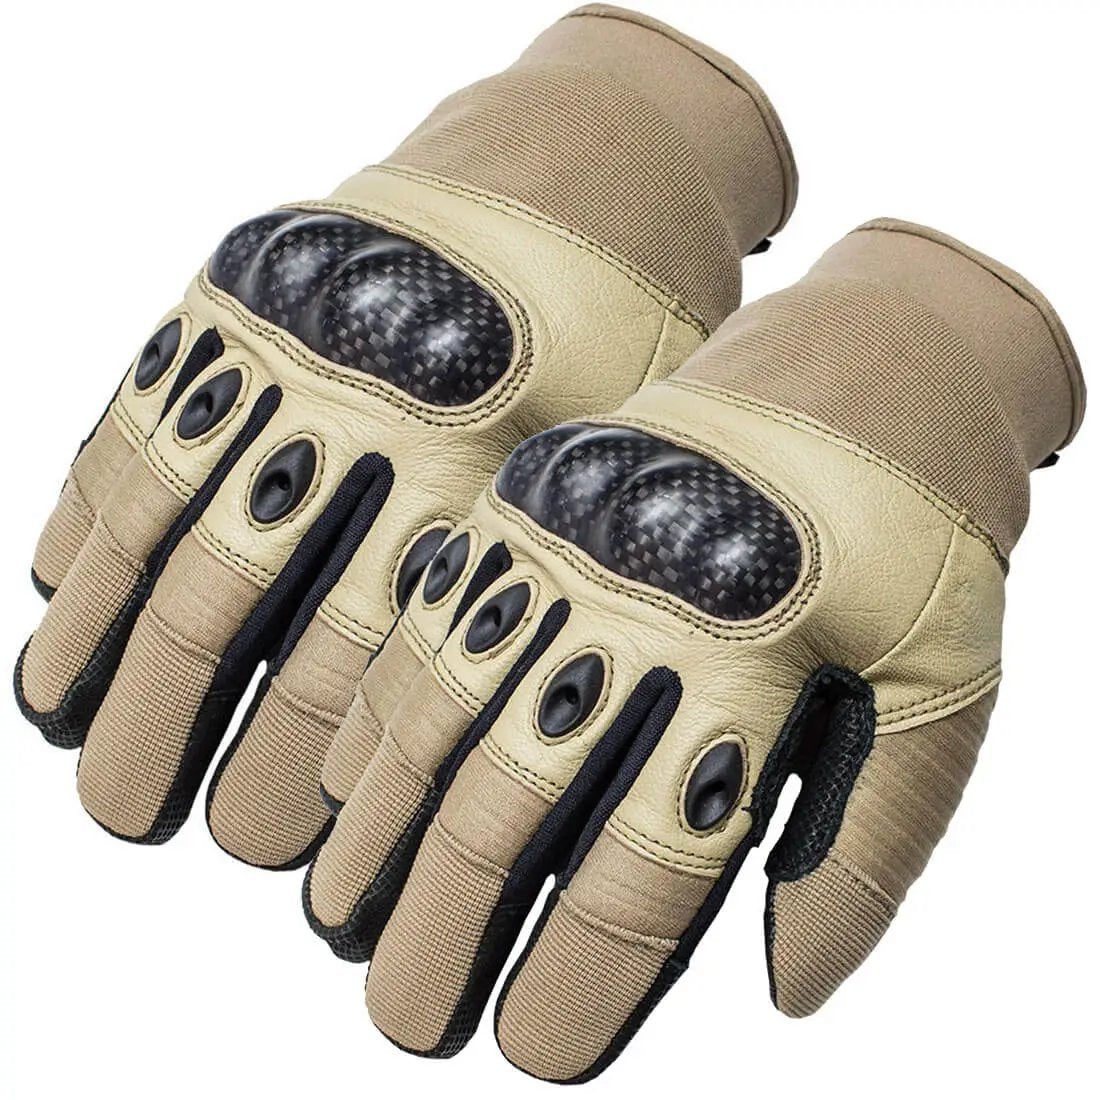 Highlander Tactical Combat Gloves Tan - John Bull Clothing